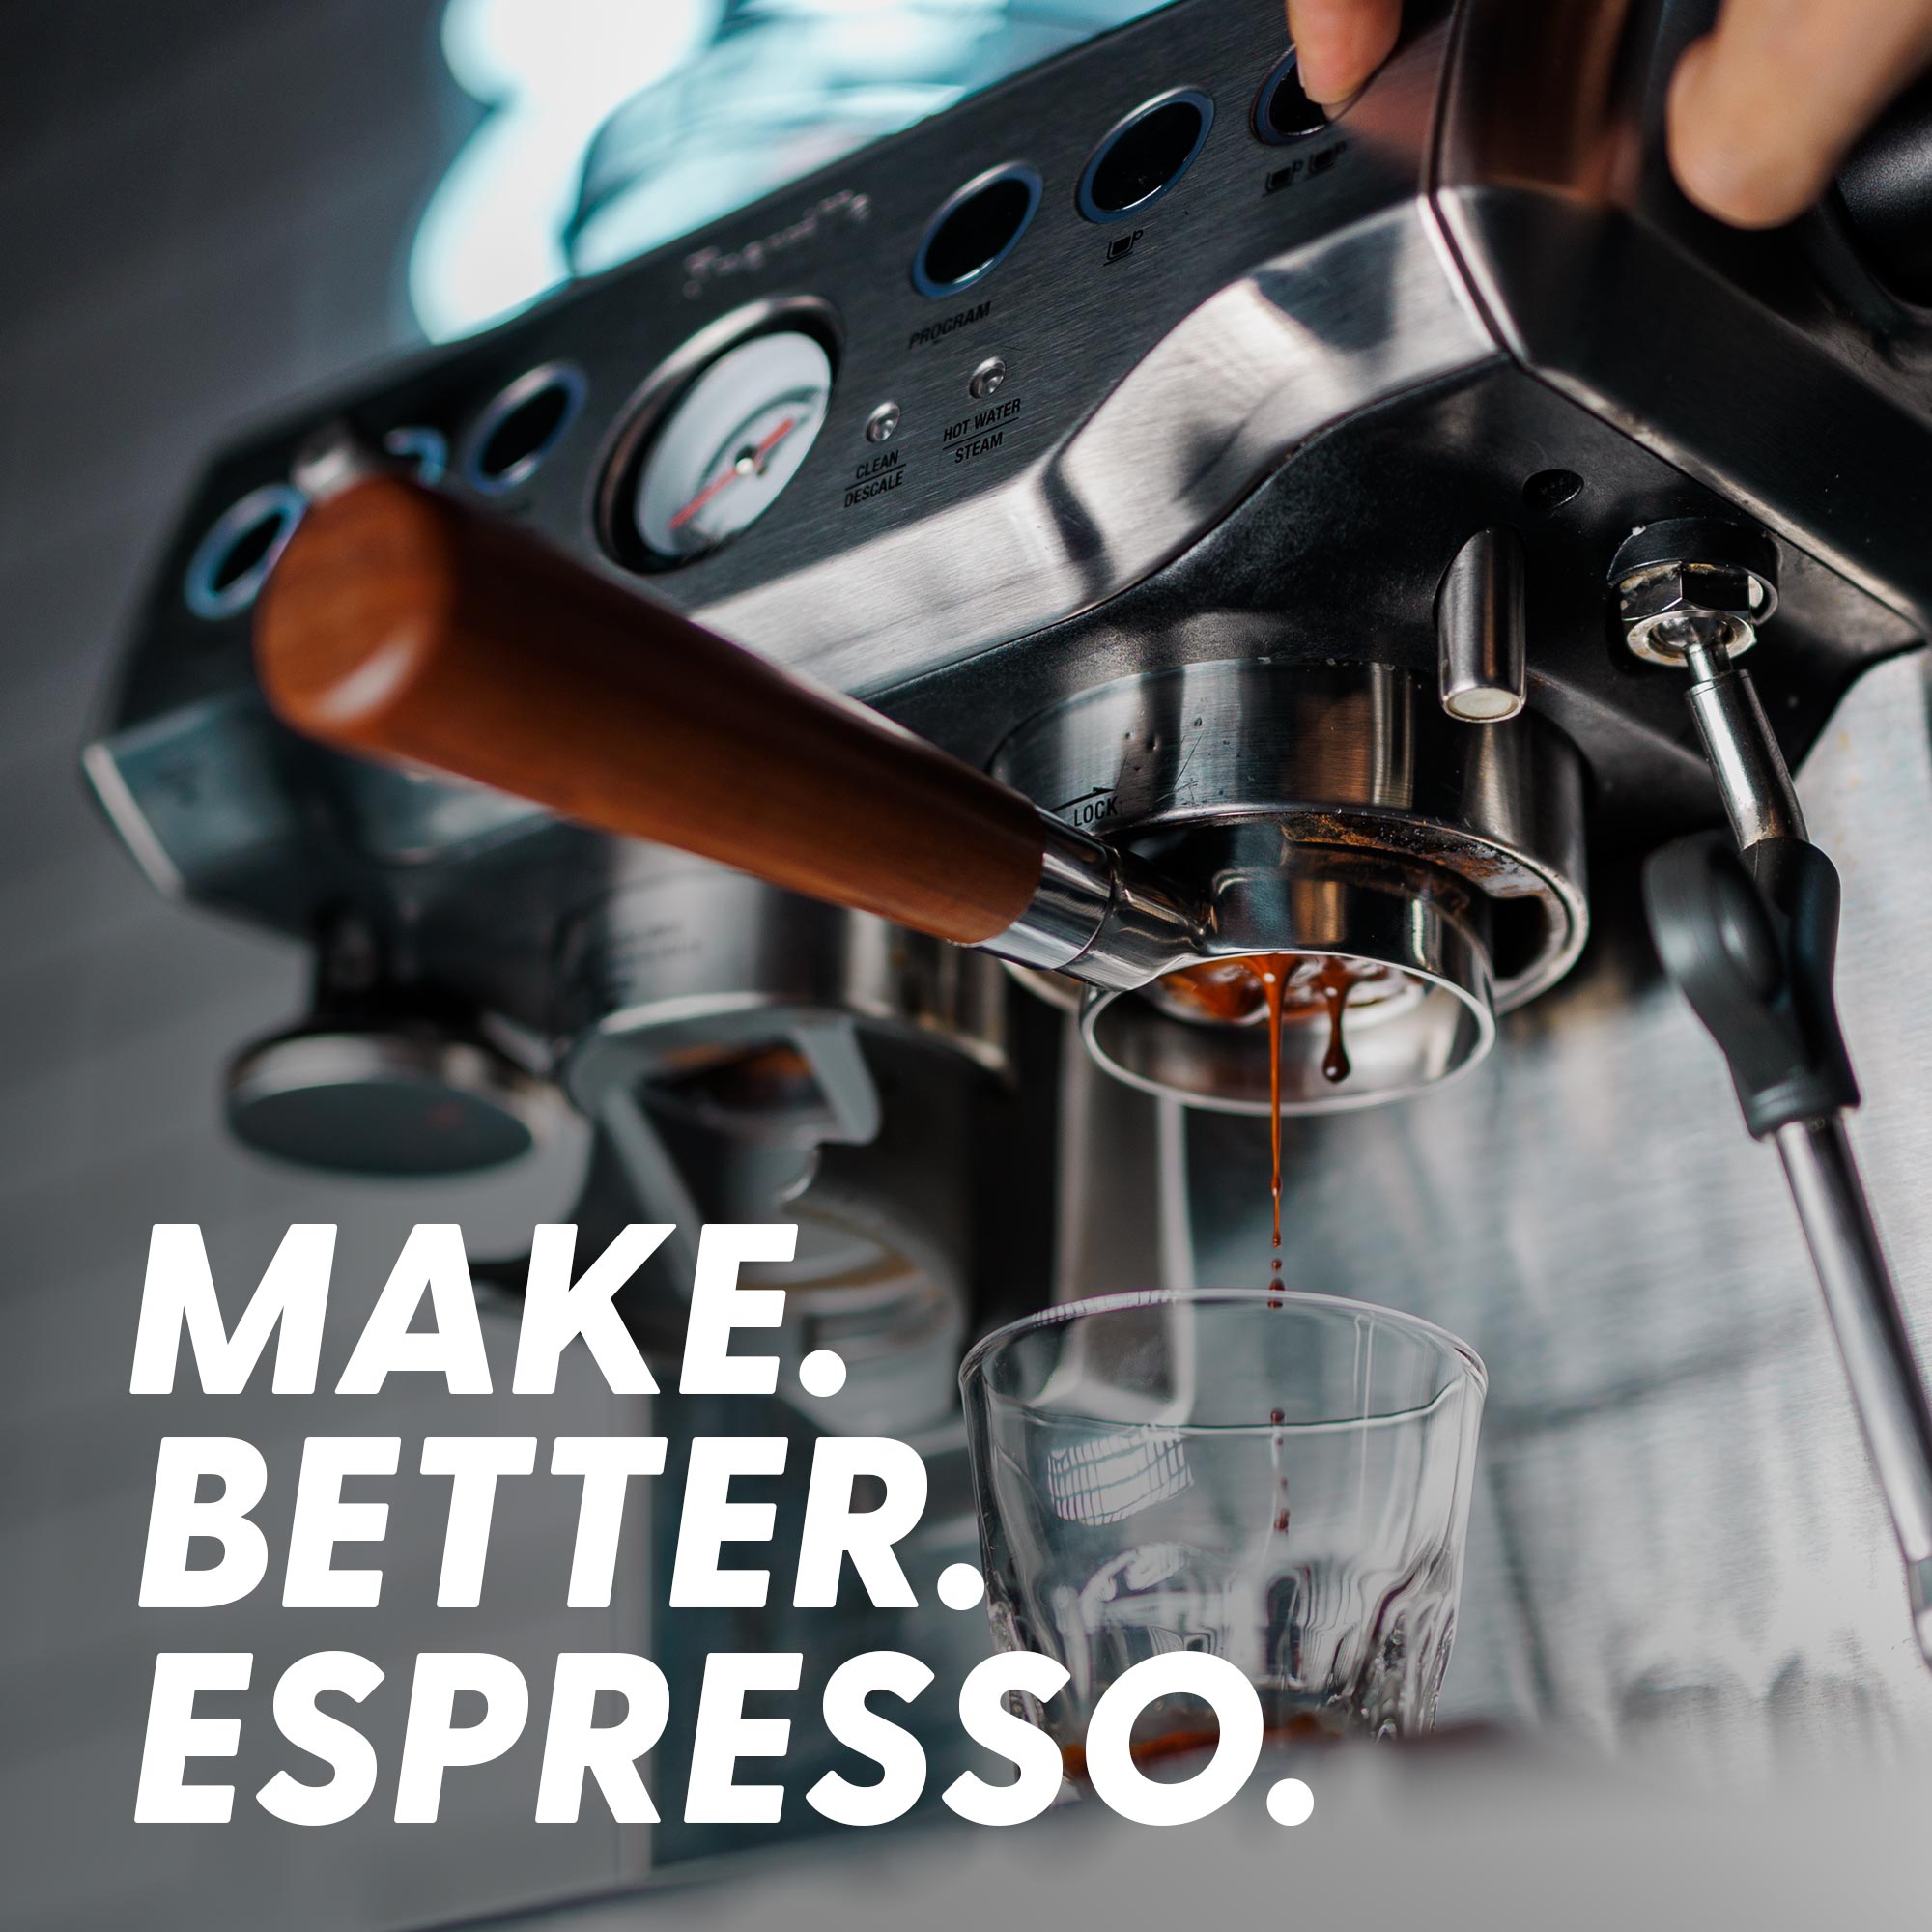 Making Better Espresso